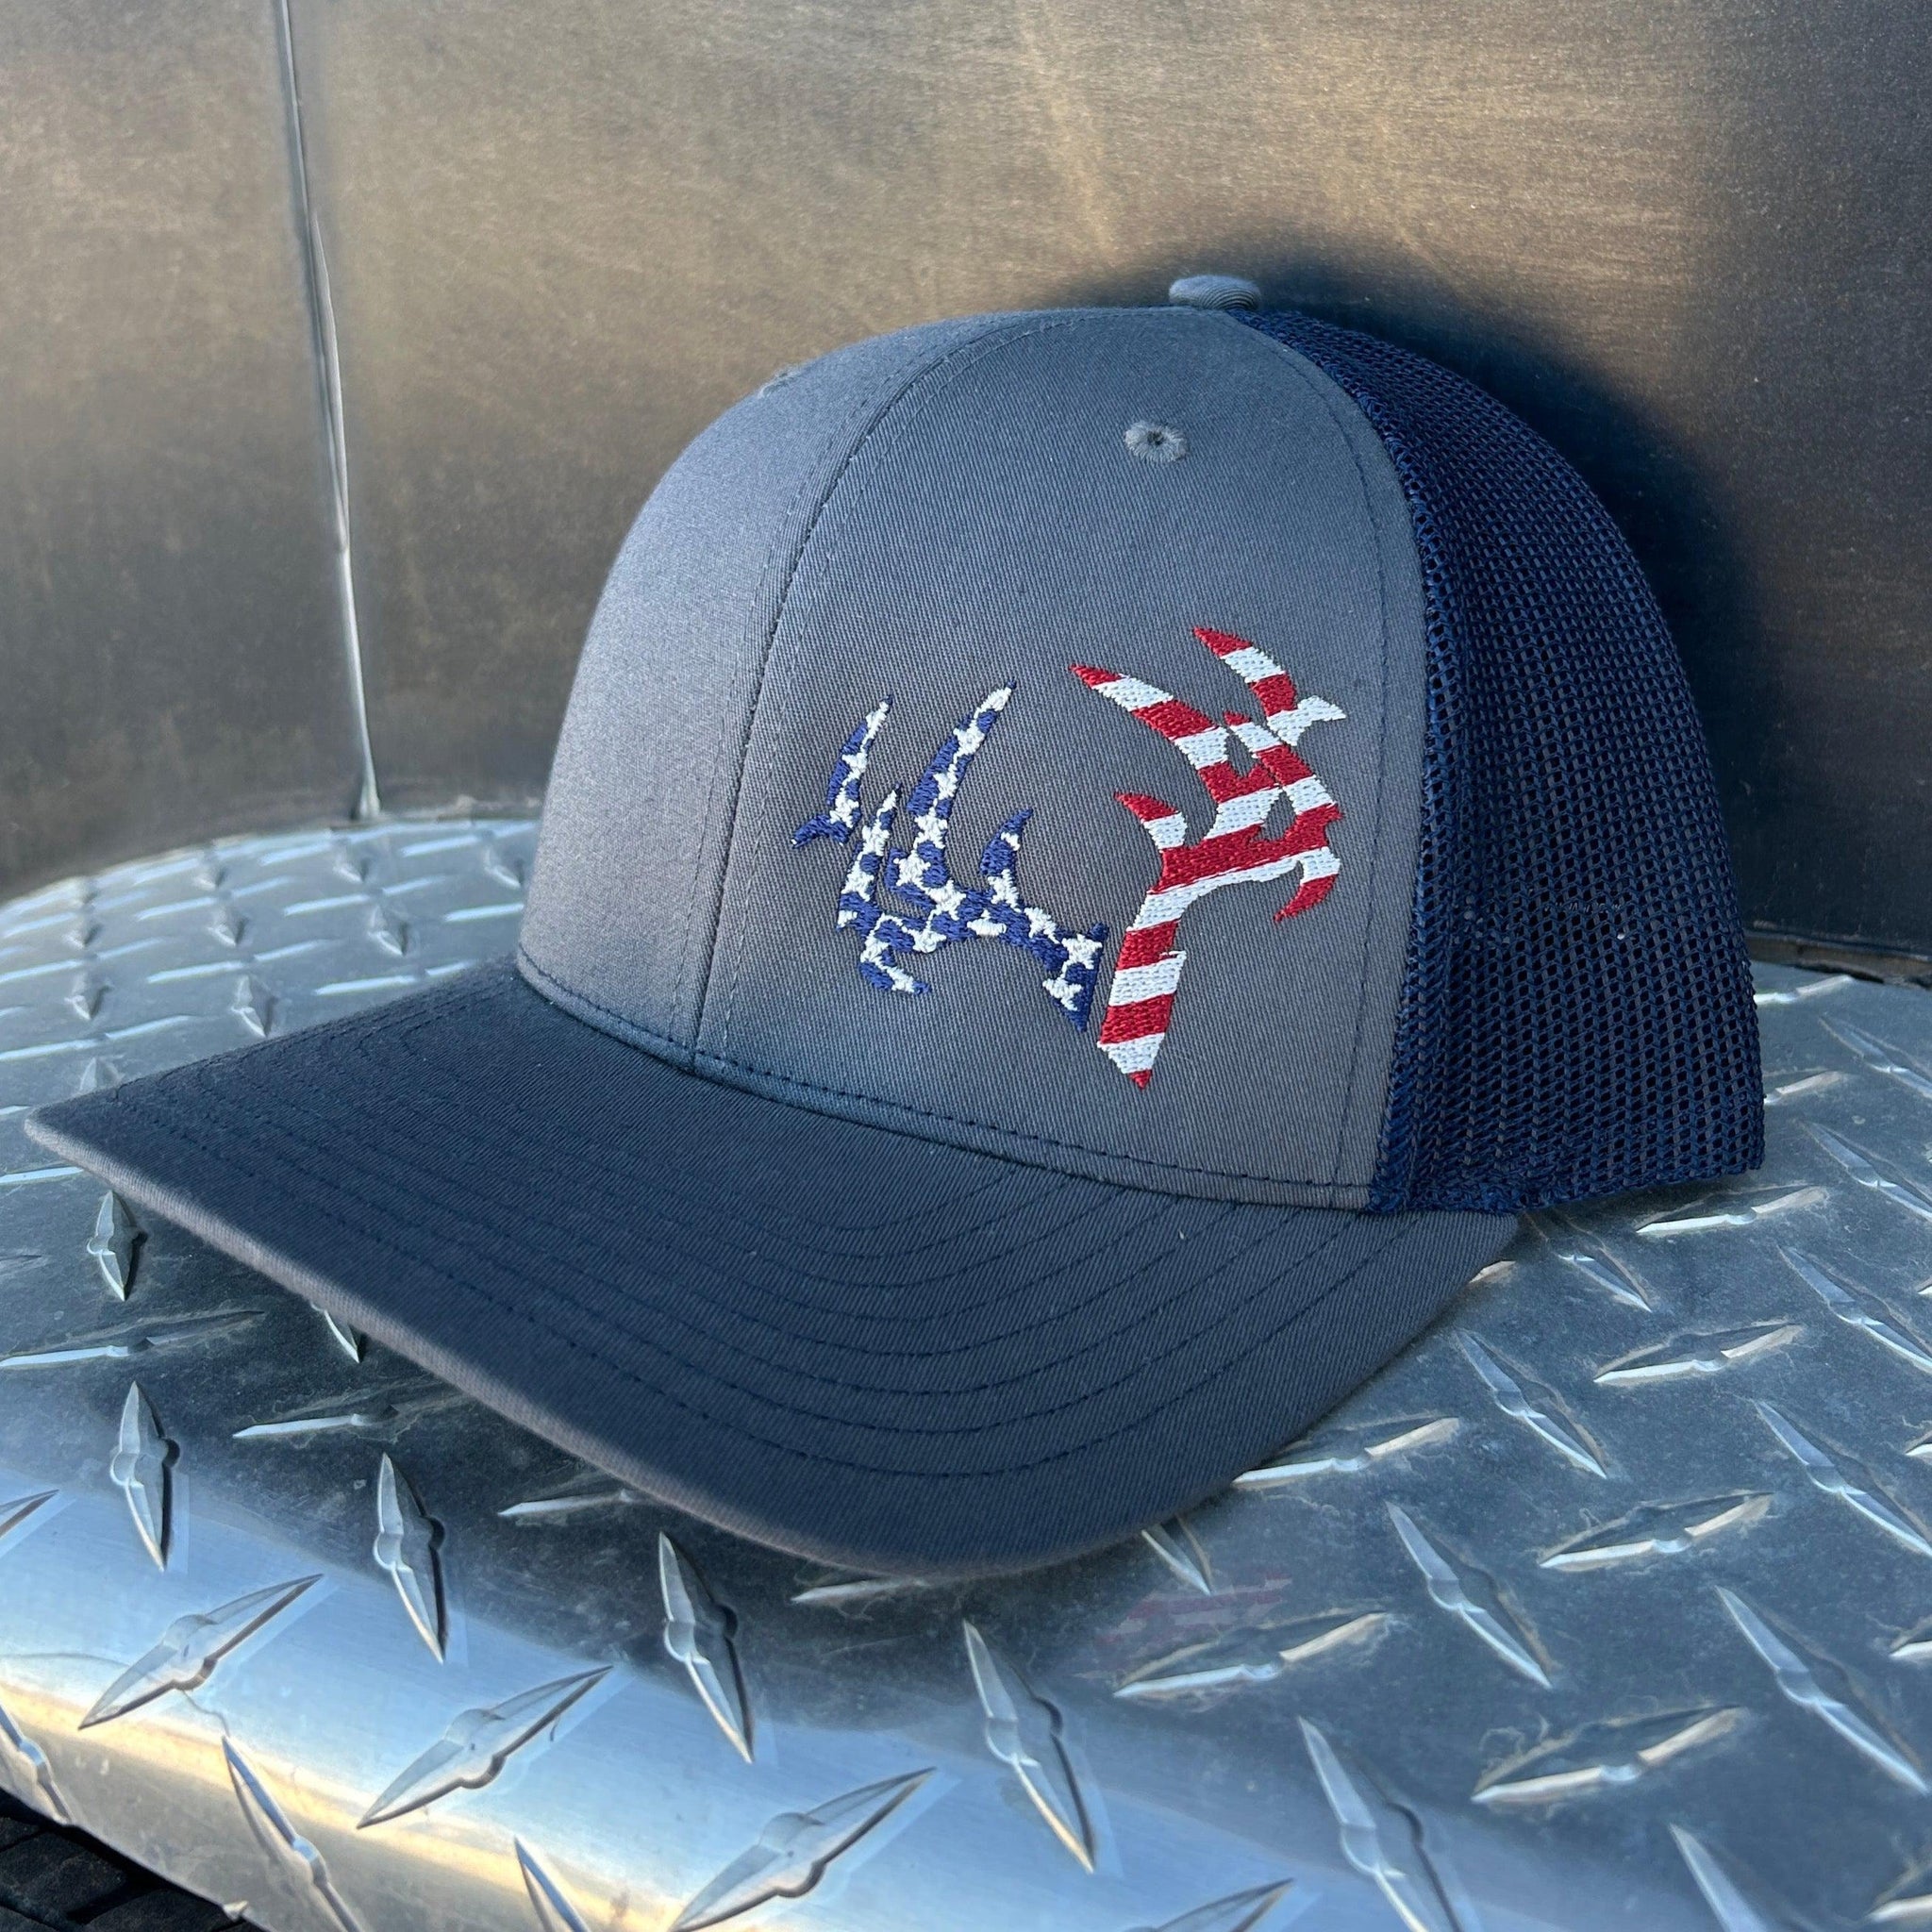 Star Spangled Rak Trucker Hat at RakAdx